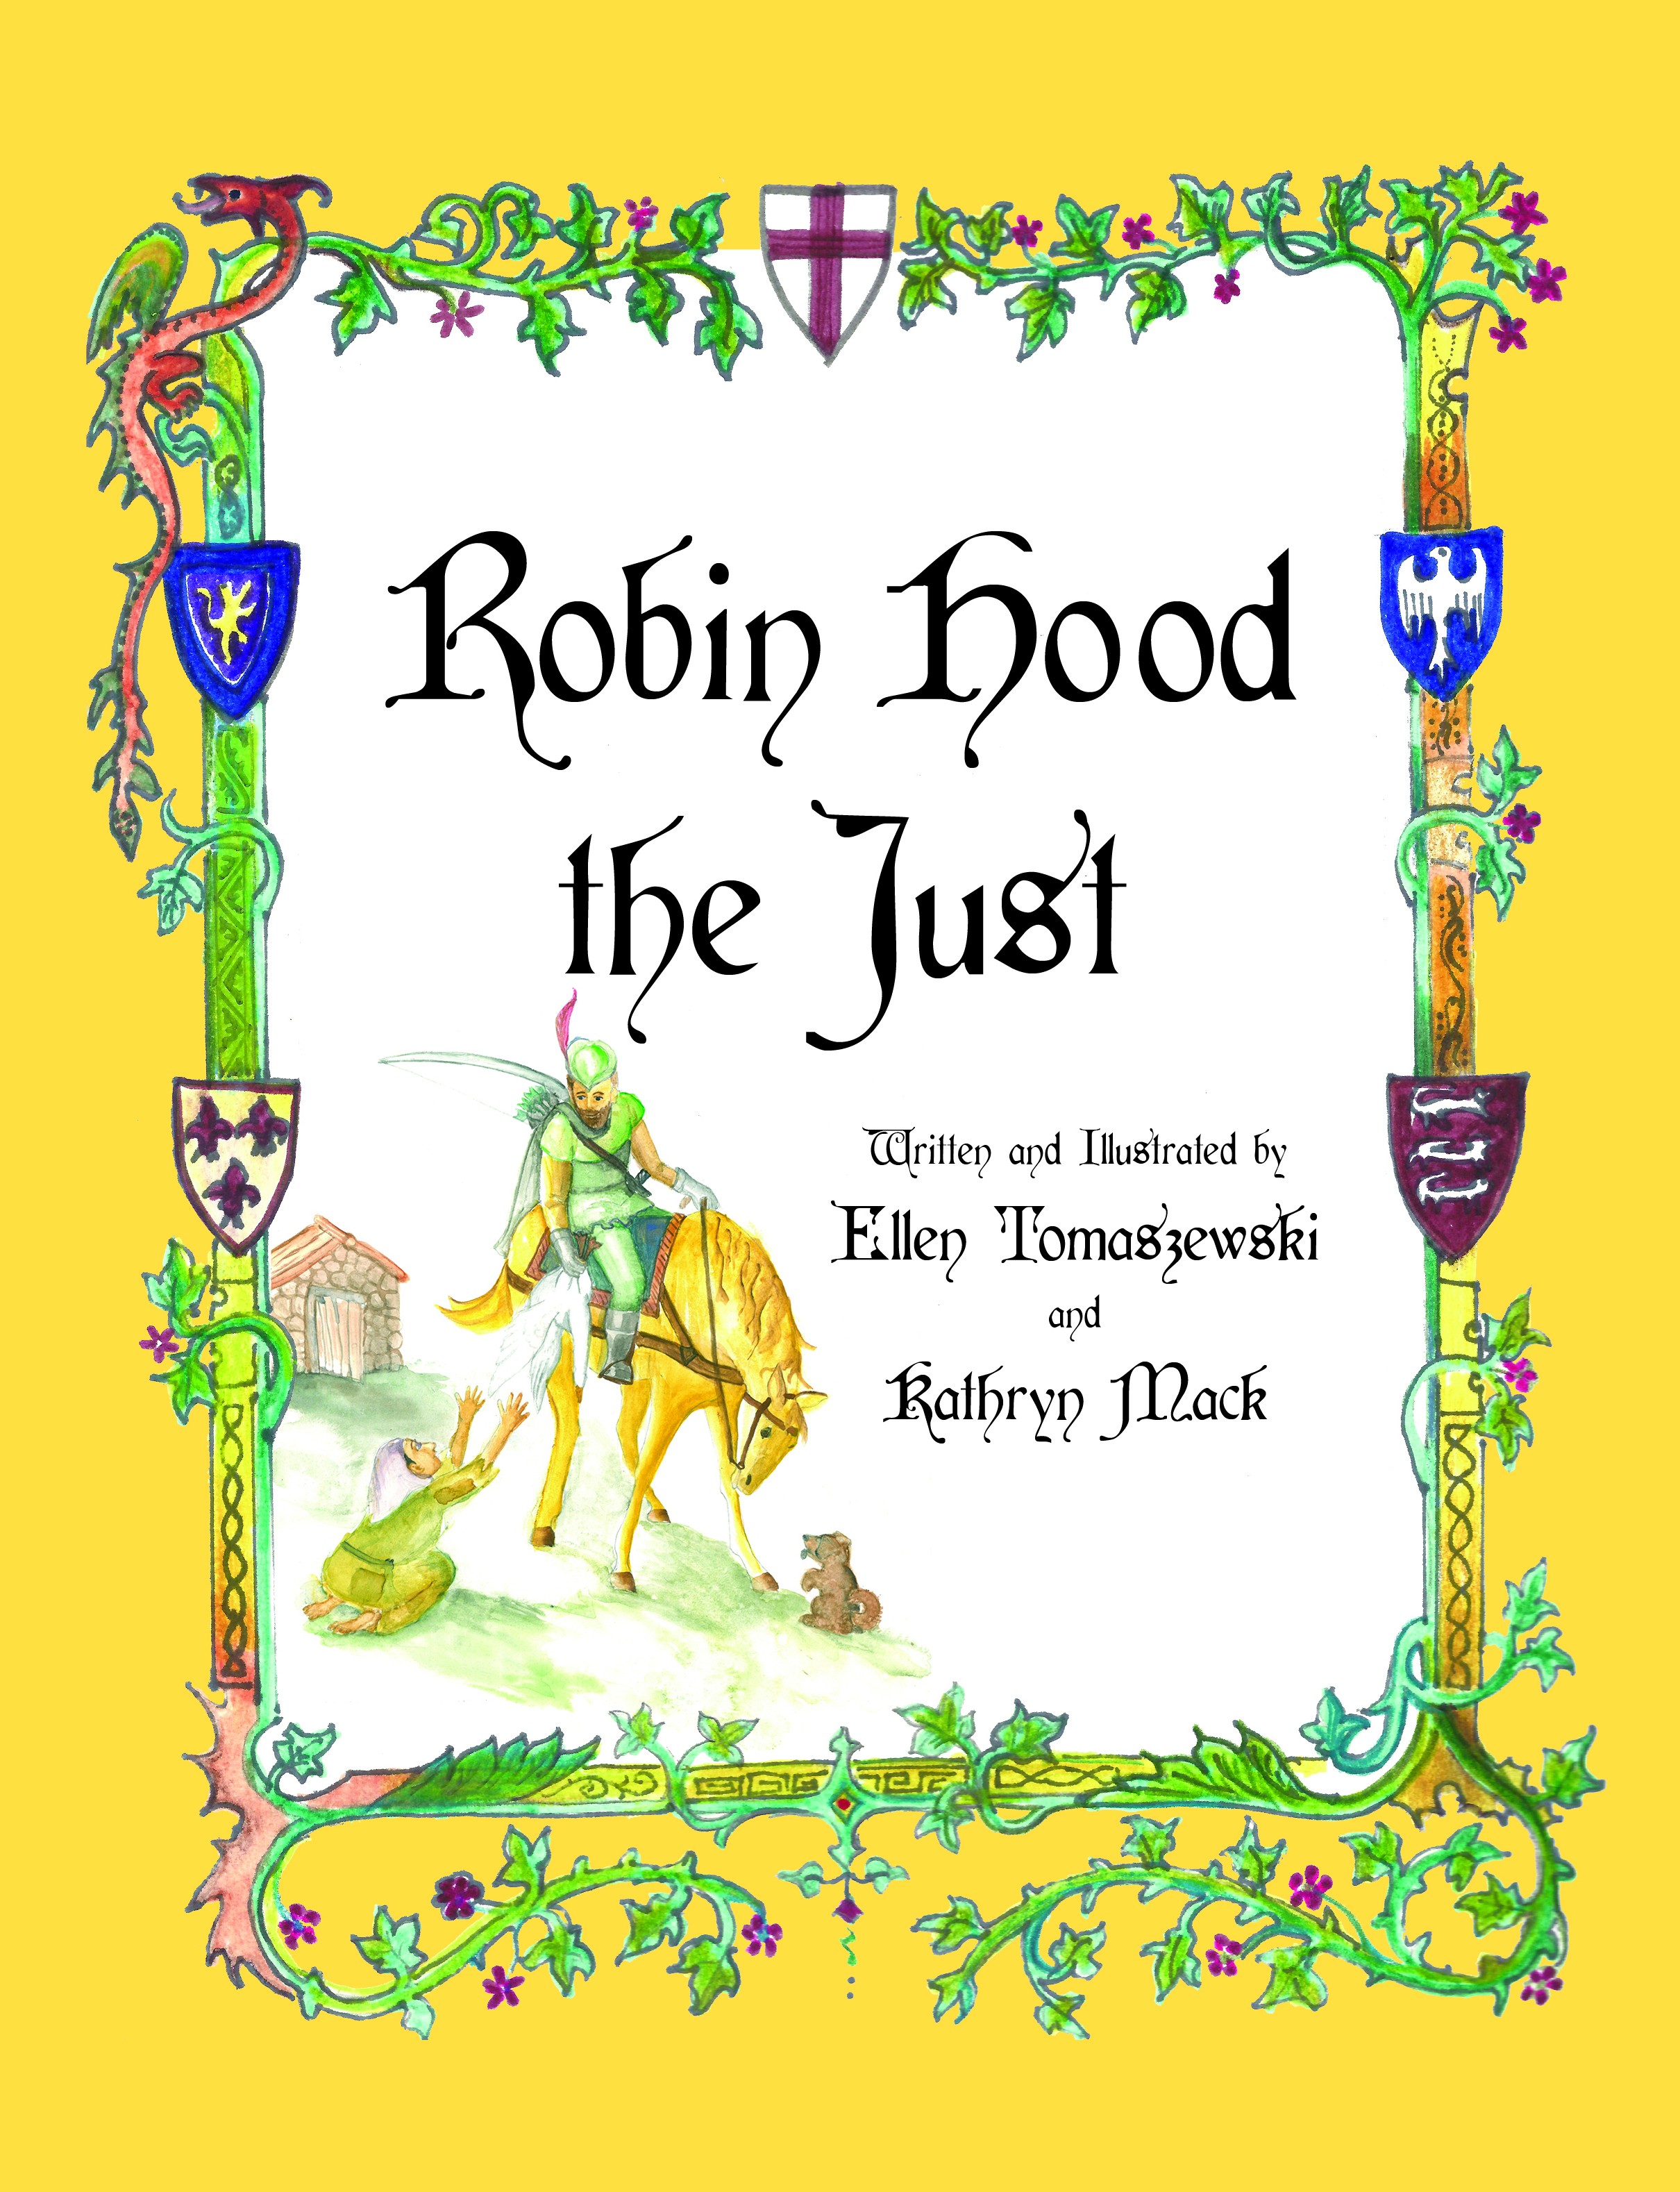 Robin Hood The Just A Catholic Hero / Ellen Tomaszewski and Kathryn Mack